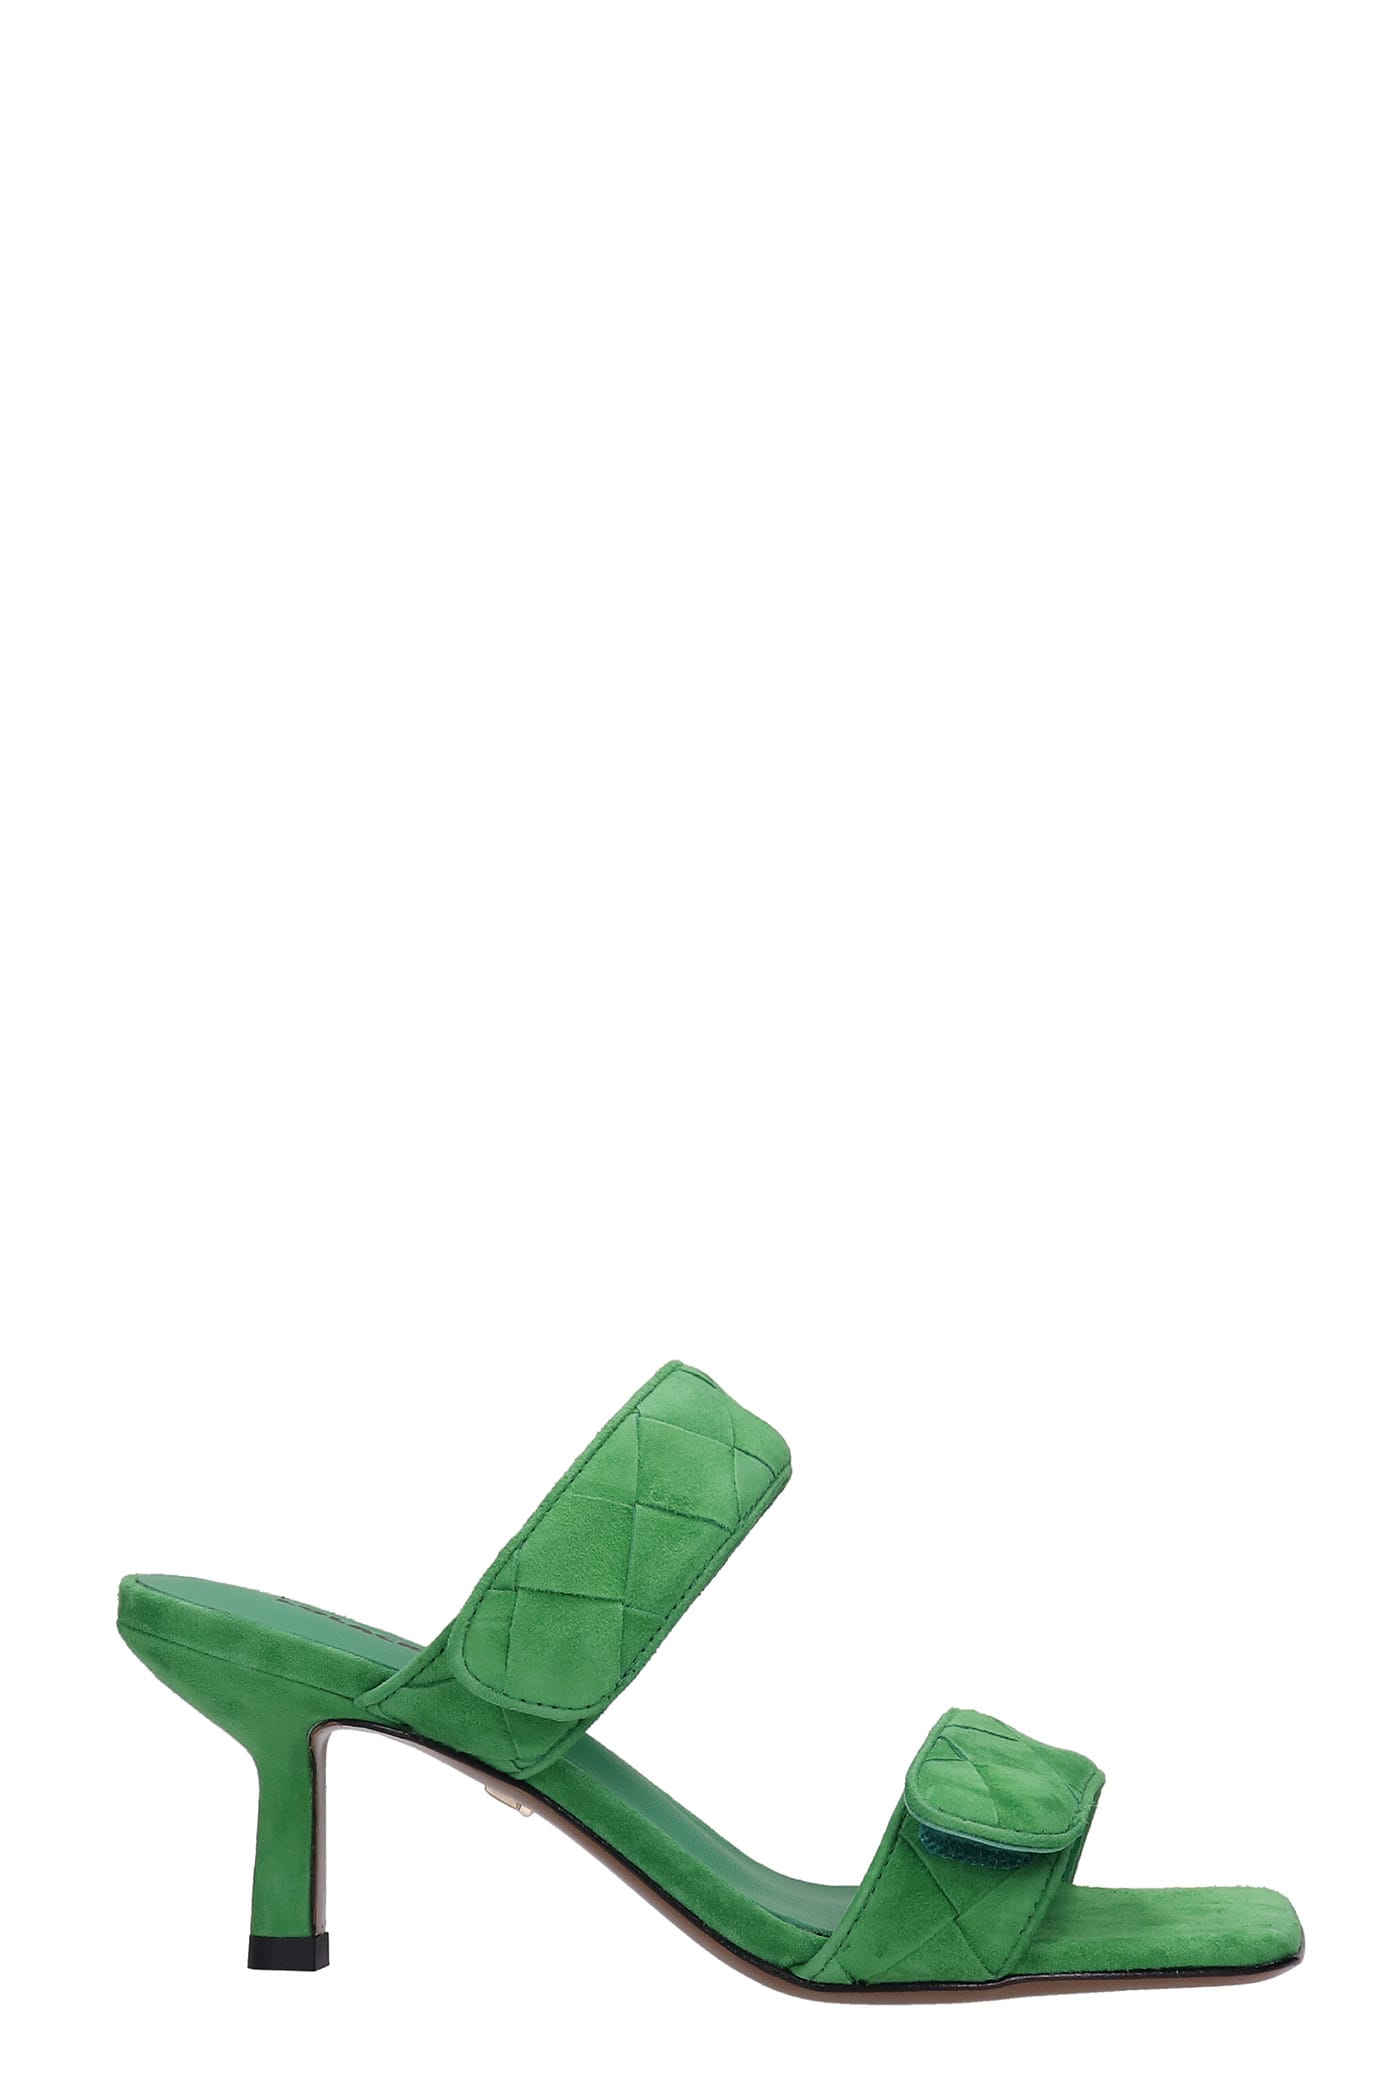 lola cruz sandals in green suede